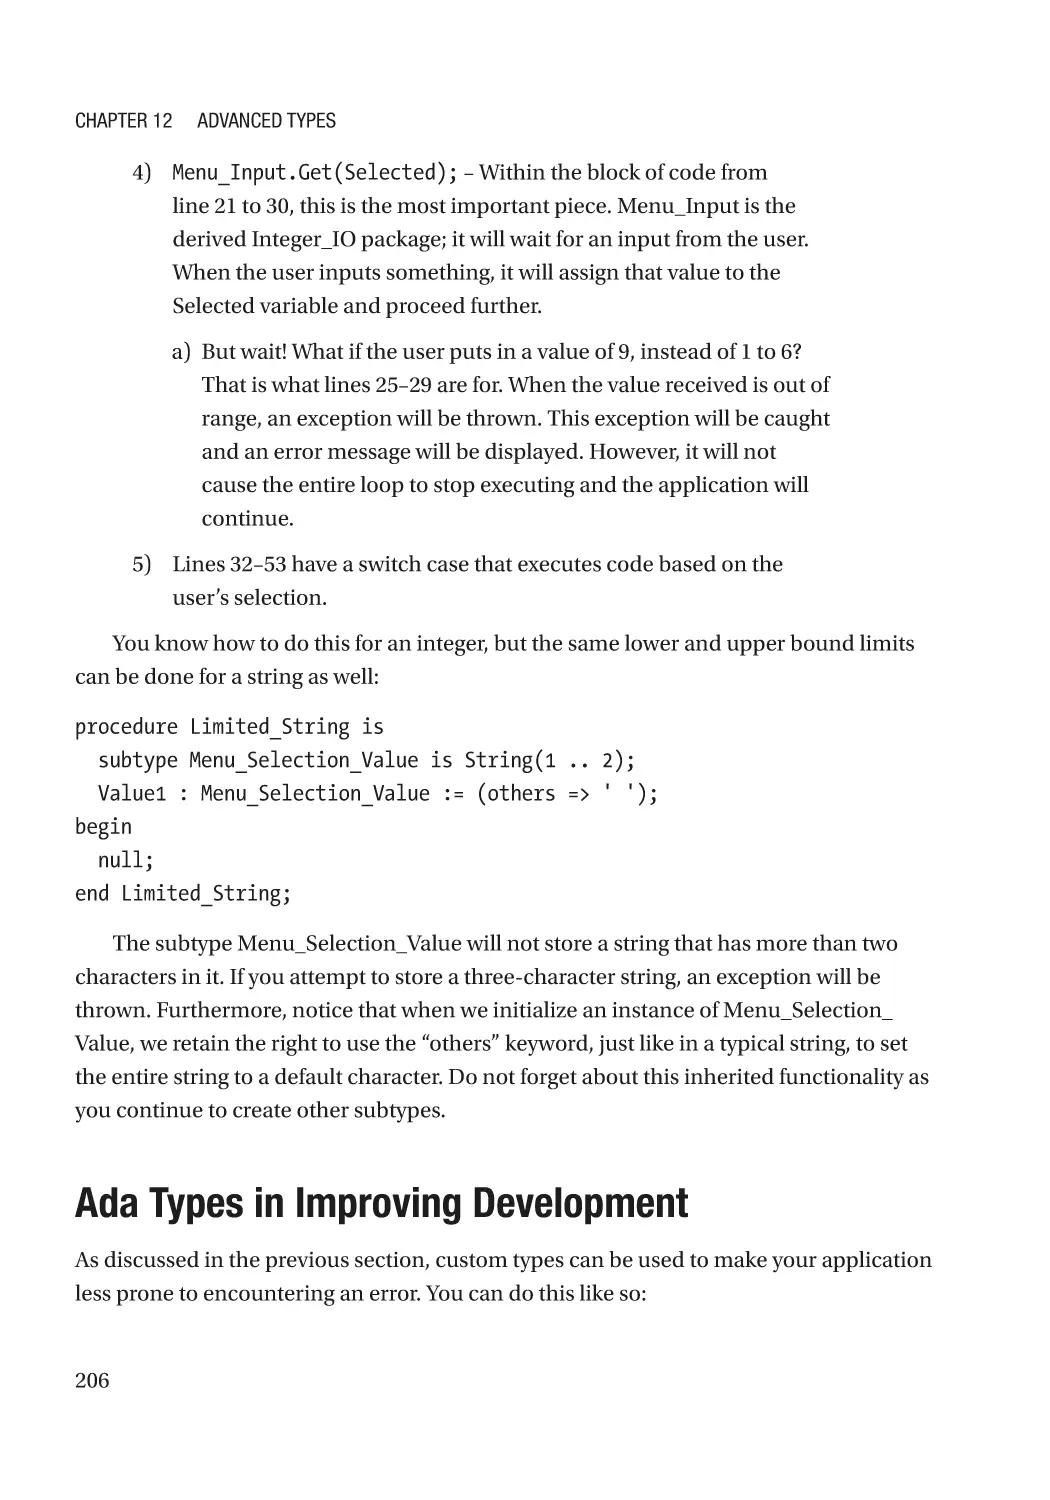 Ada Types in Improving Development